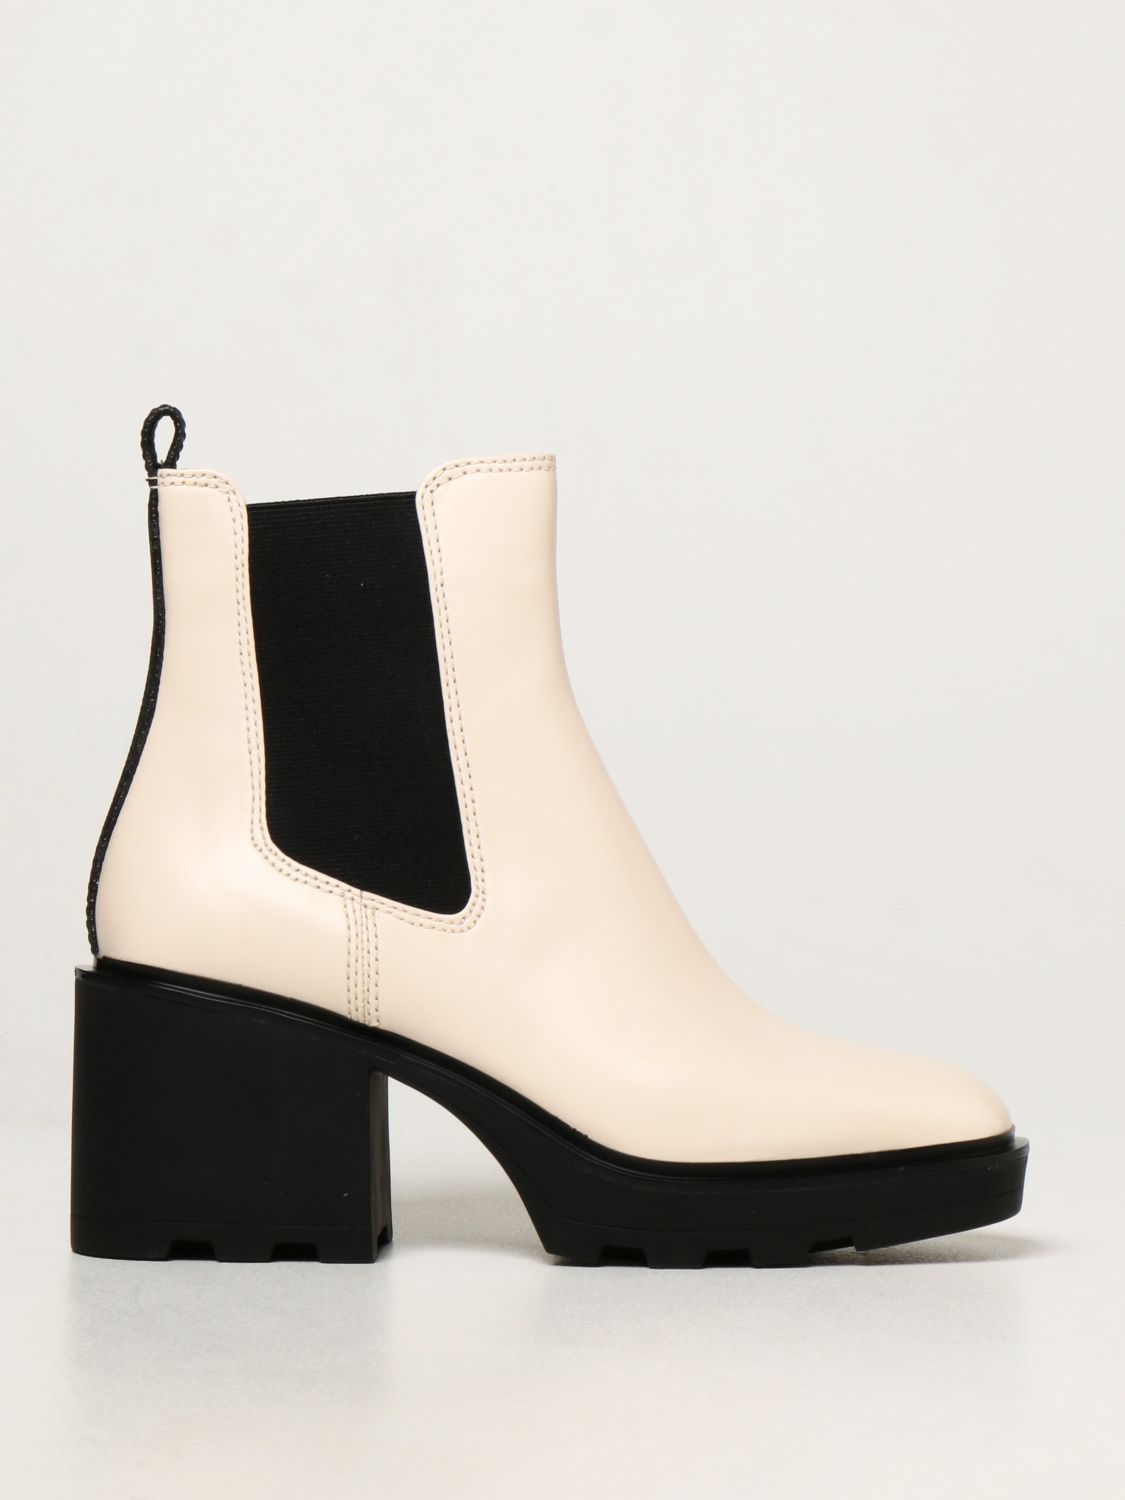 MICHAEL KORS: Keisha Michael leather ankle boots - Cream | Michael Kors  flat booties 40F1KEME1L online on 